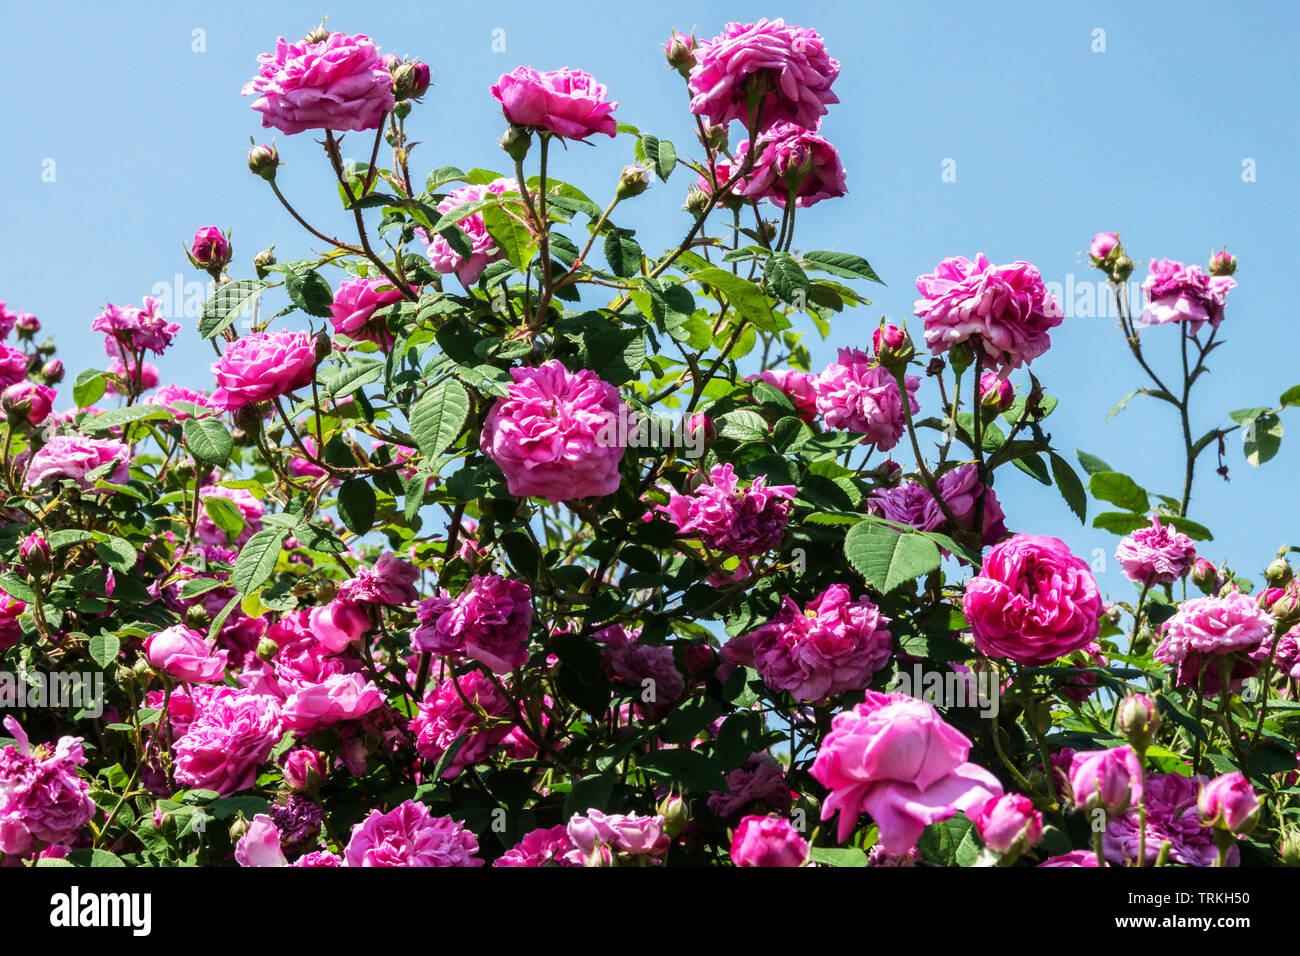 Flowering shrubs Rosa Centifolia Cabbage Rose Stock Photo